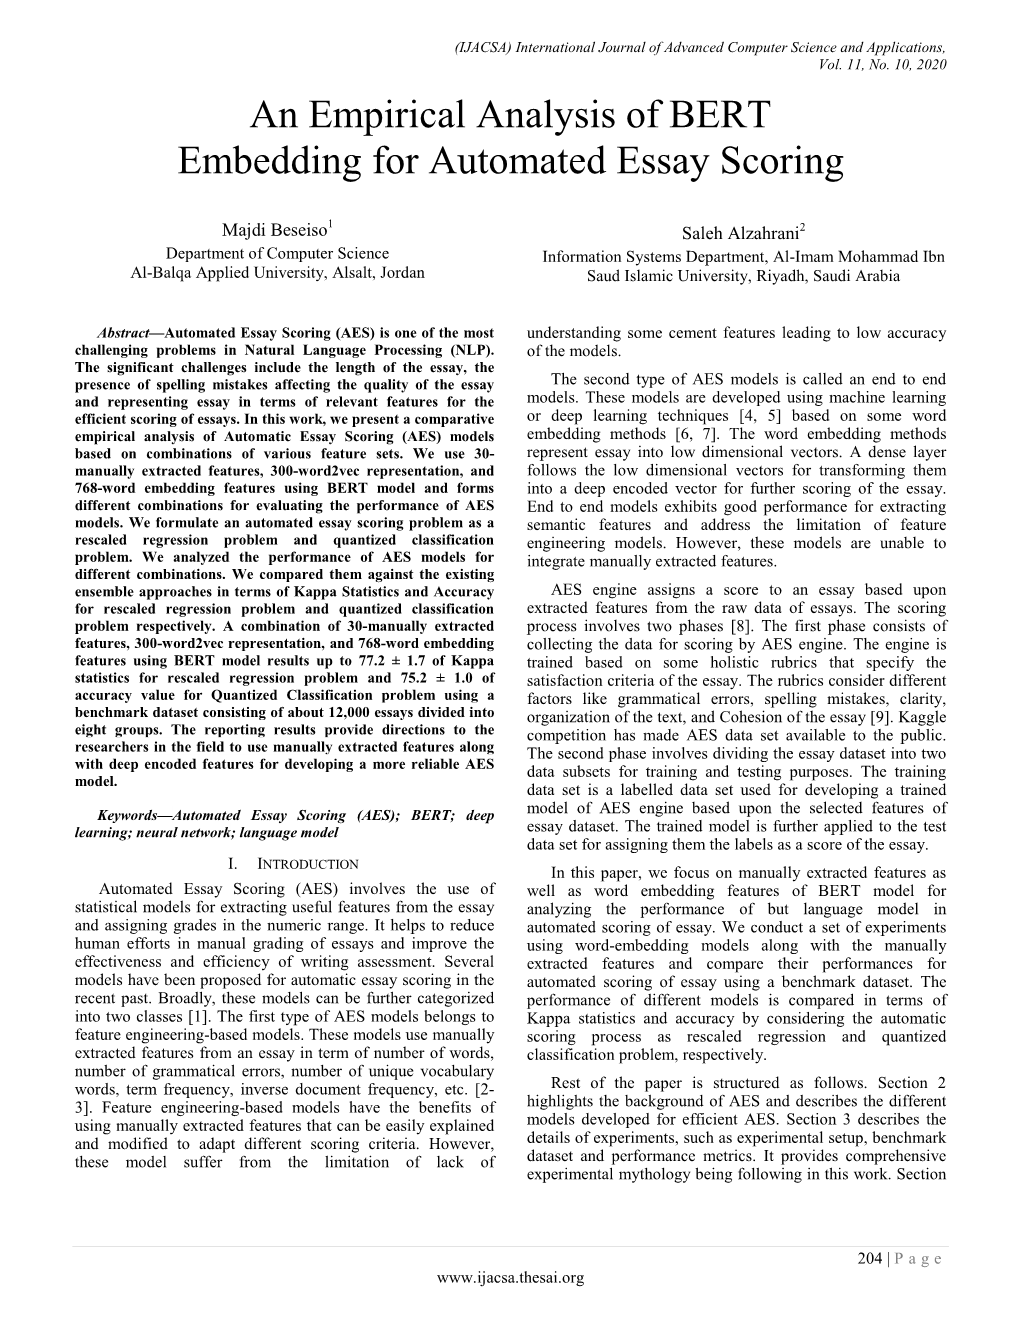 An Empirical Analysis of BERT Embedding for Automated Essay Scoring